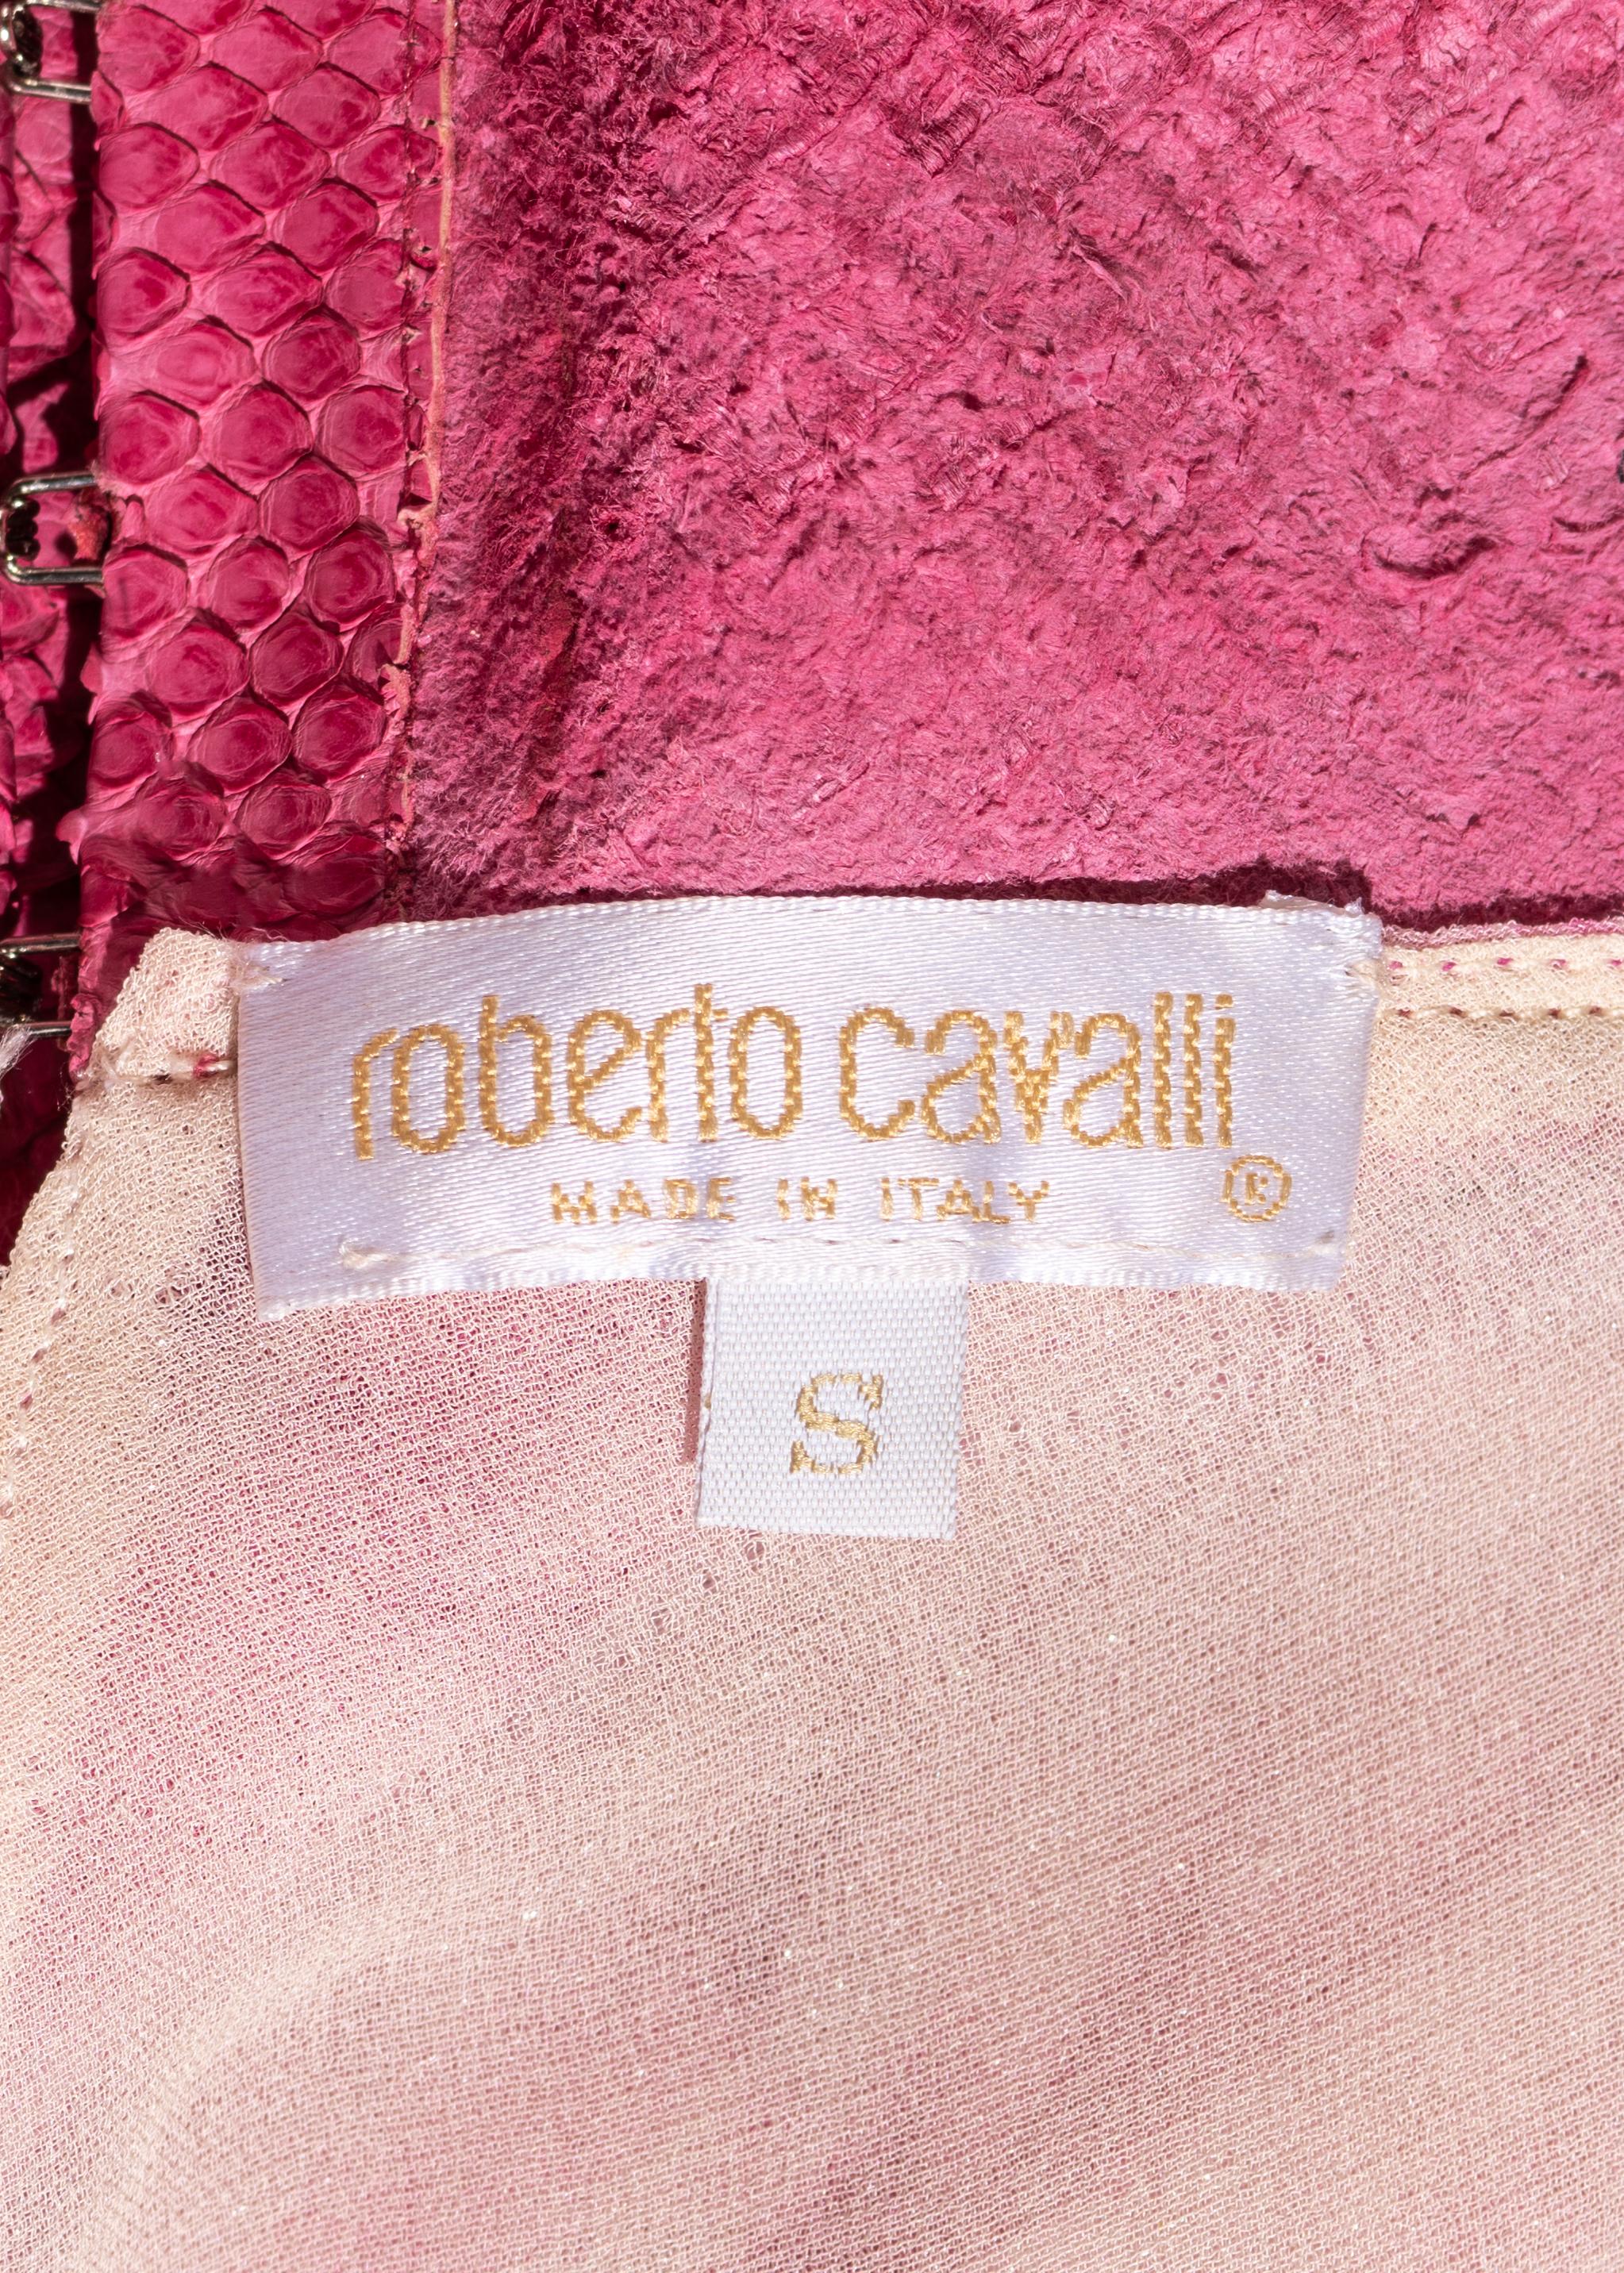 Women's Roberto Cavalli pink silk and snakeskin evening maxi dress, ss 1999 For Sale